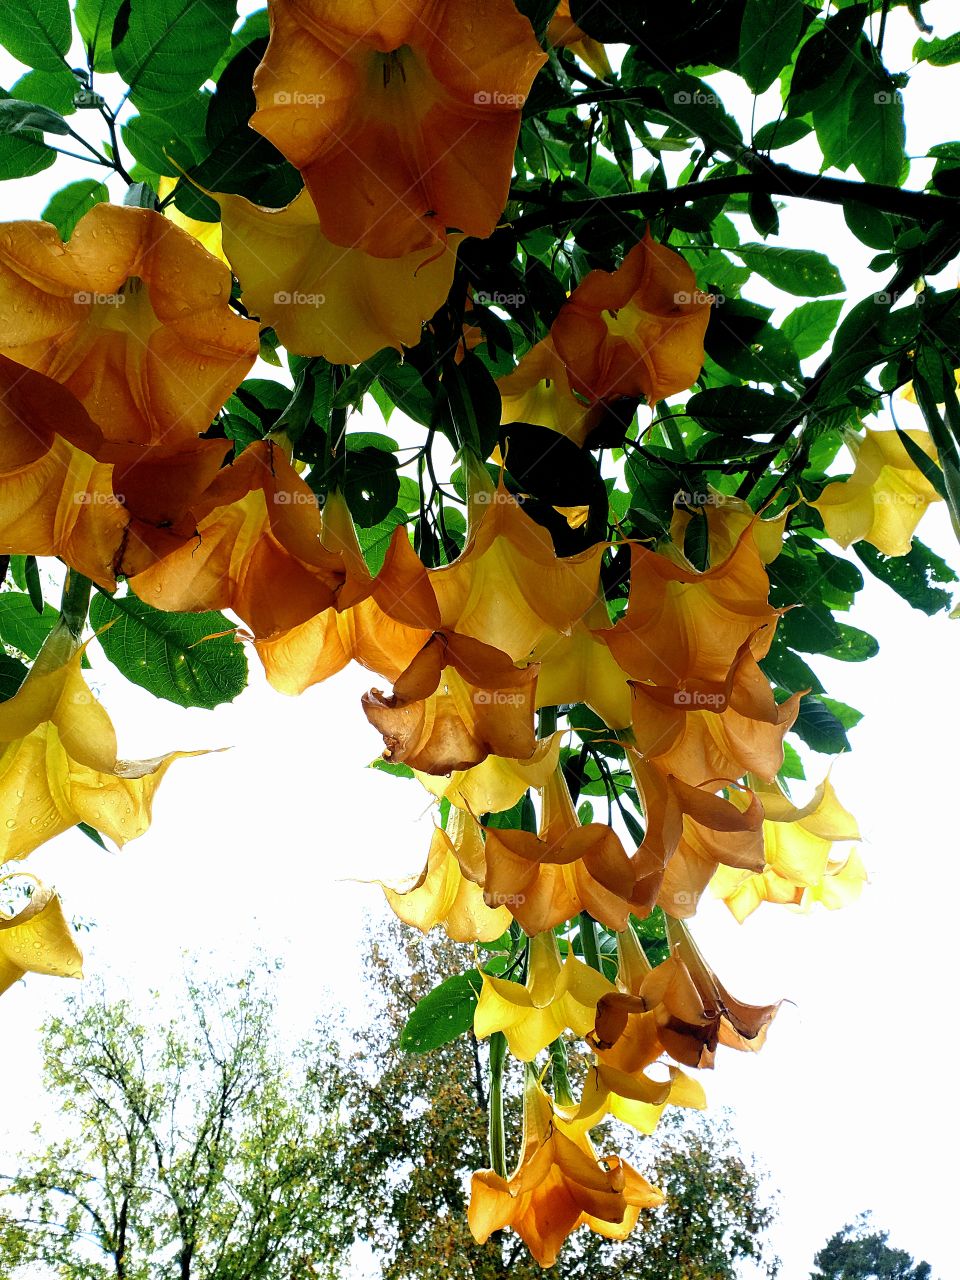 Gorgeous Trumpt Plant in Atlanta, Ga. The Yellows and Orange colors are brilliant!